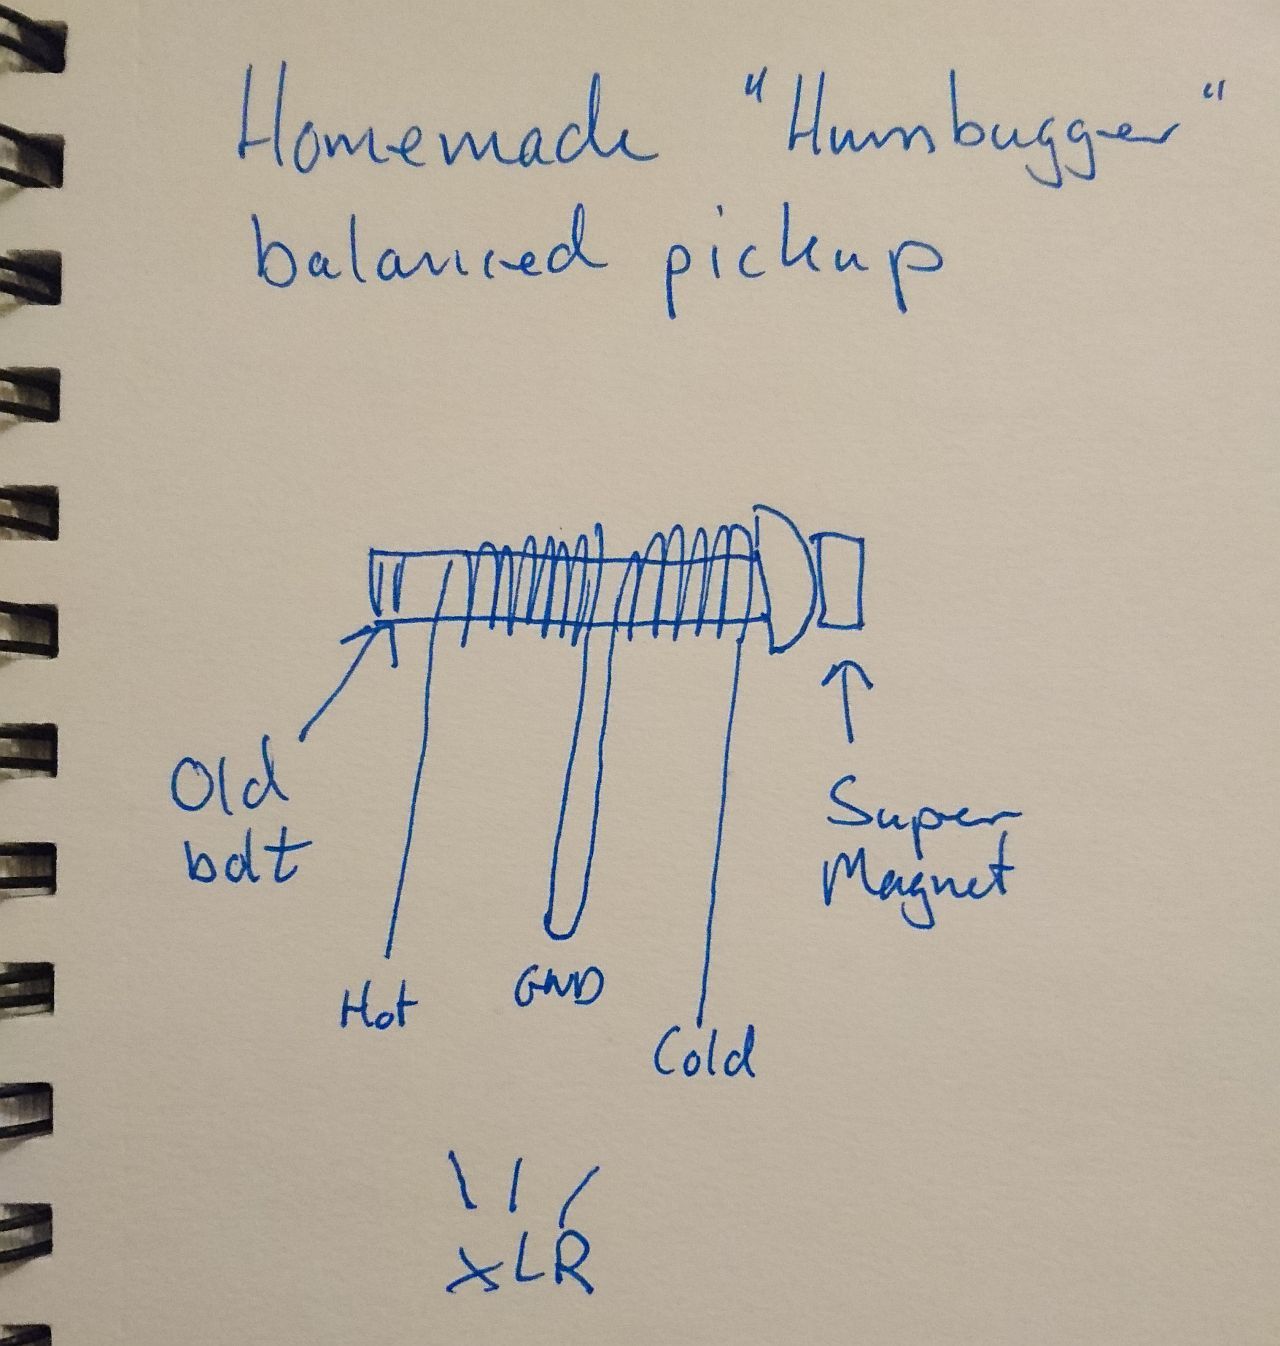 DIY "Humbugger" balanced pickup